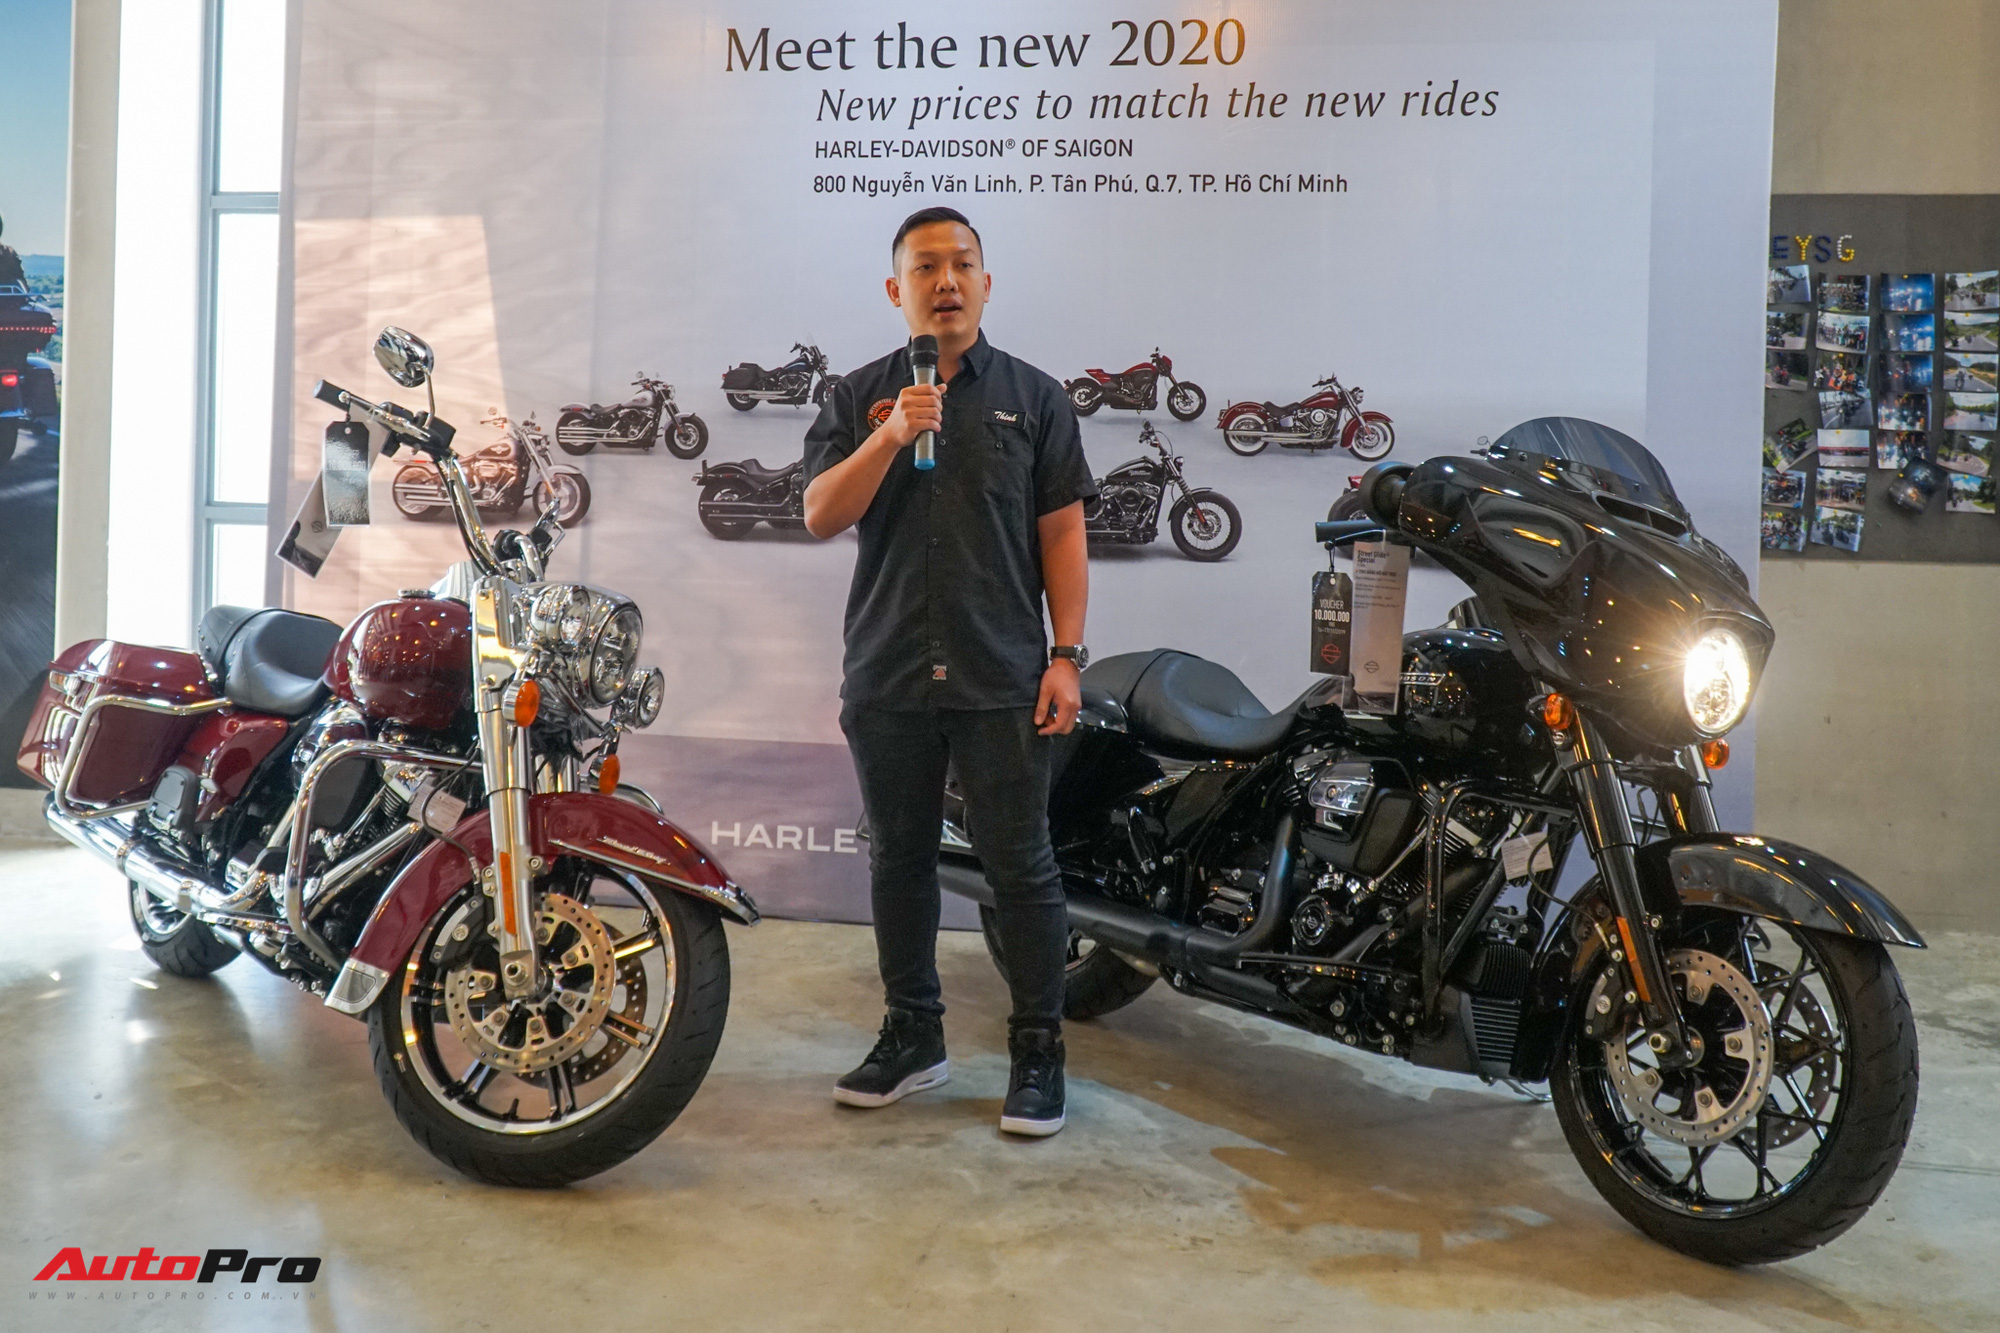 2021 HarleyDavidson Touring  CVO ra mắt đầy hoành tráng  CafeAutoVn